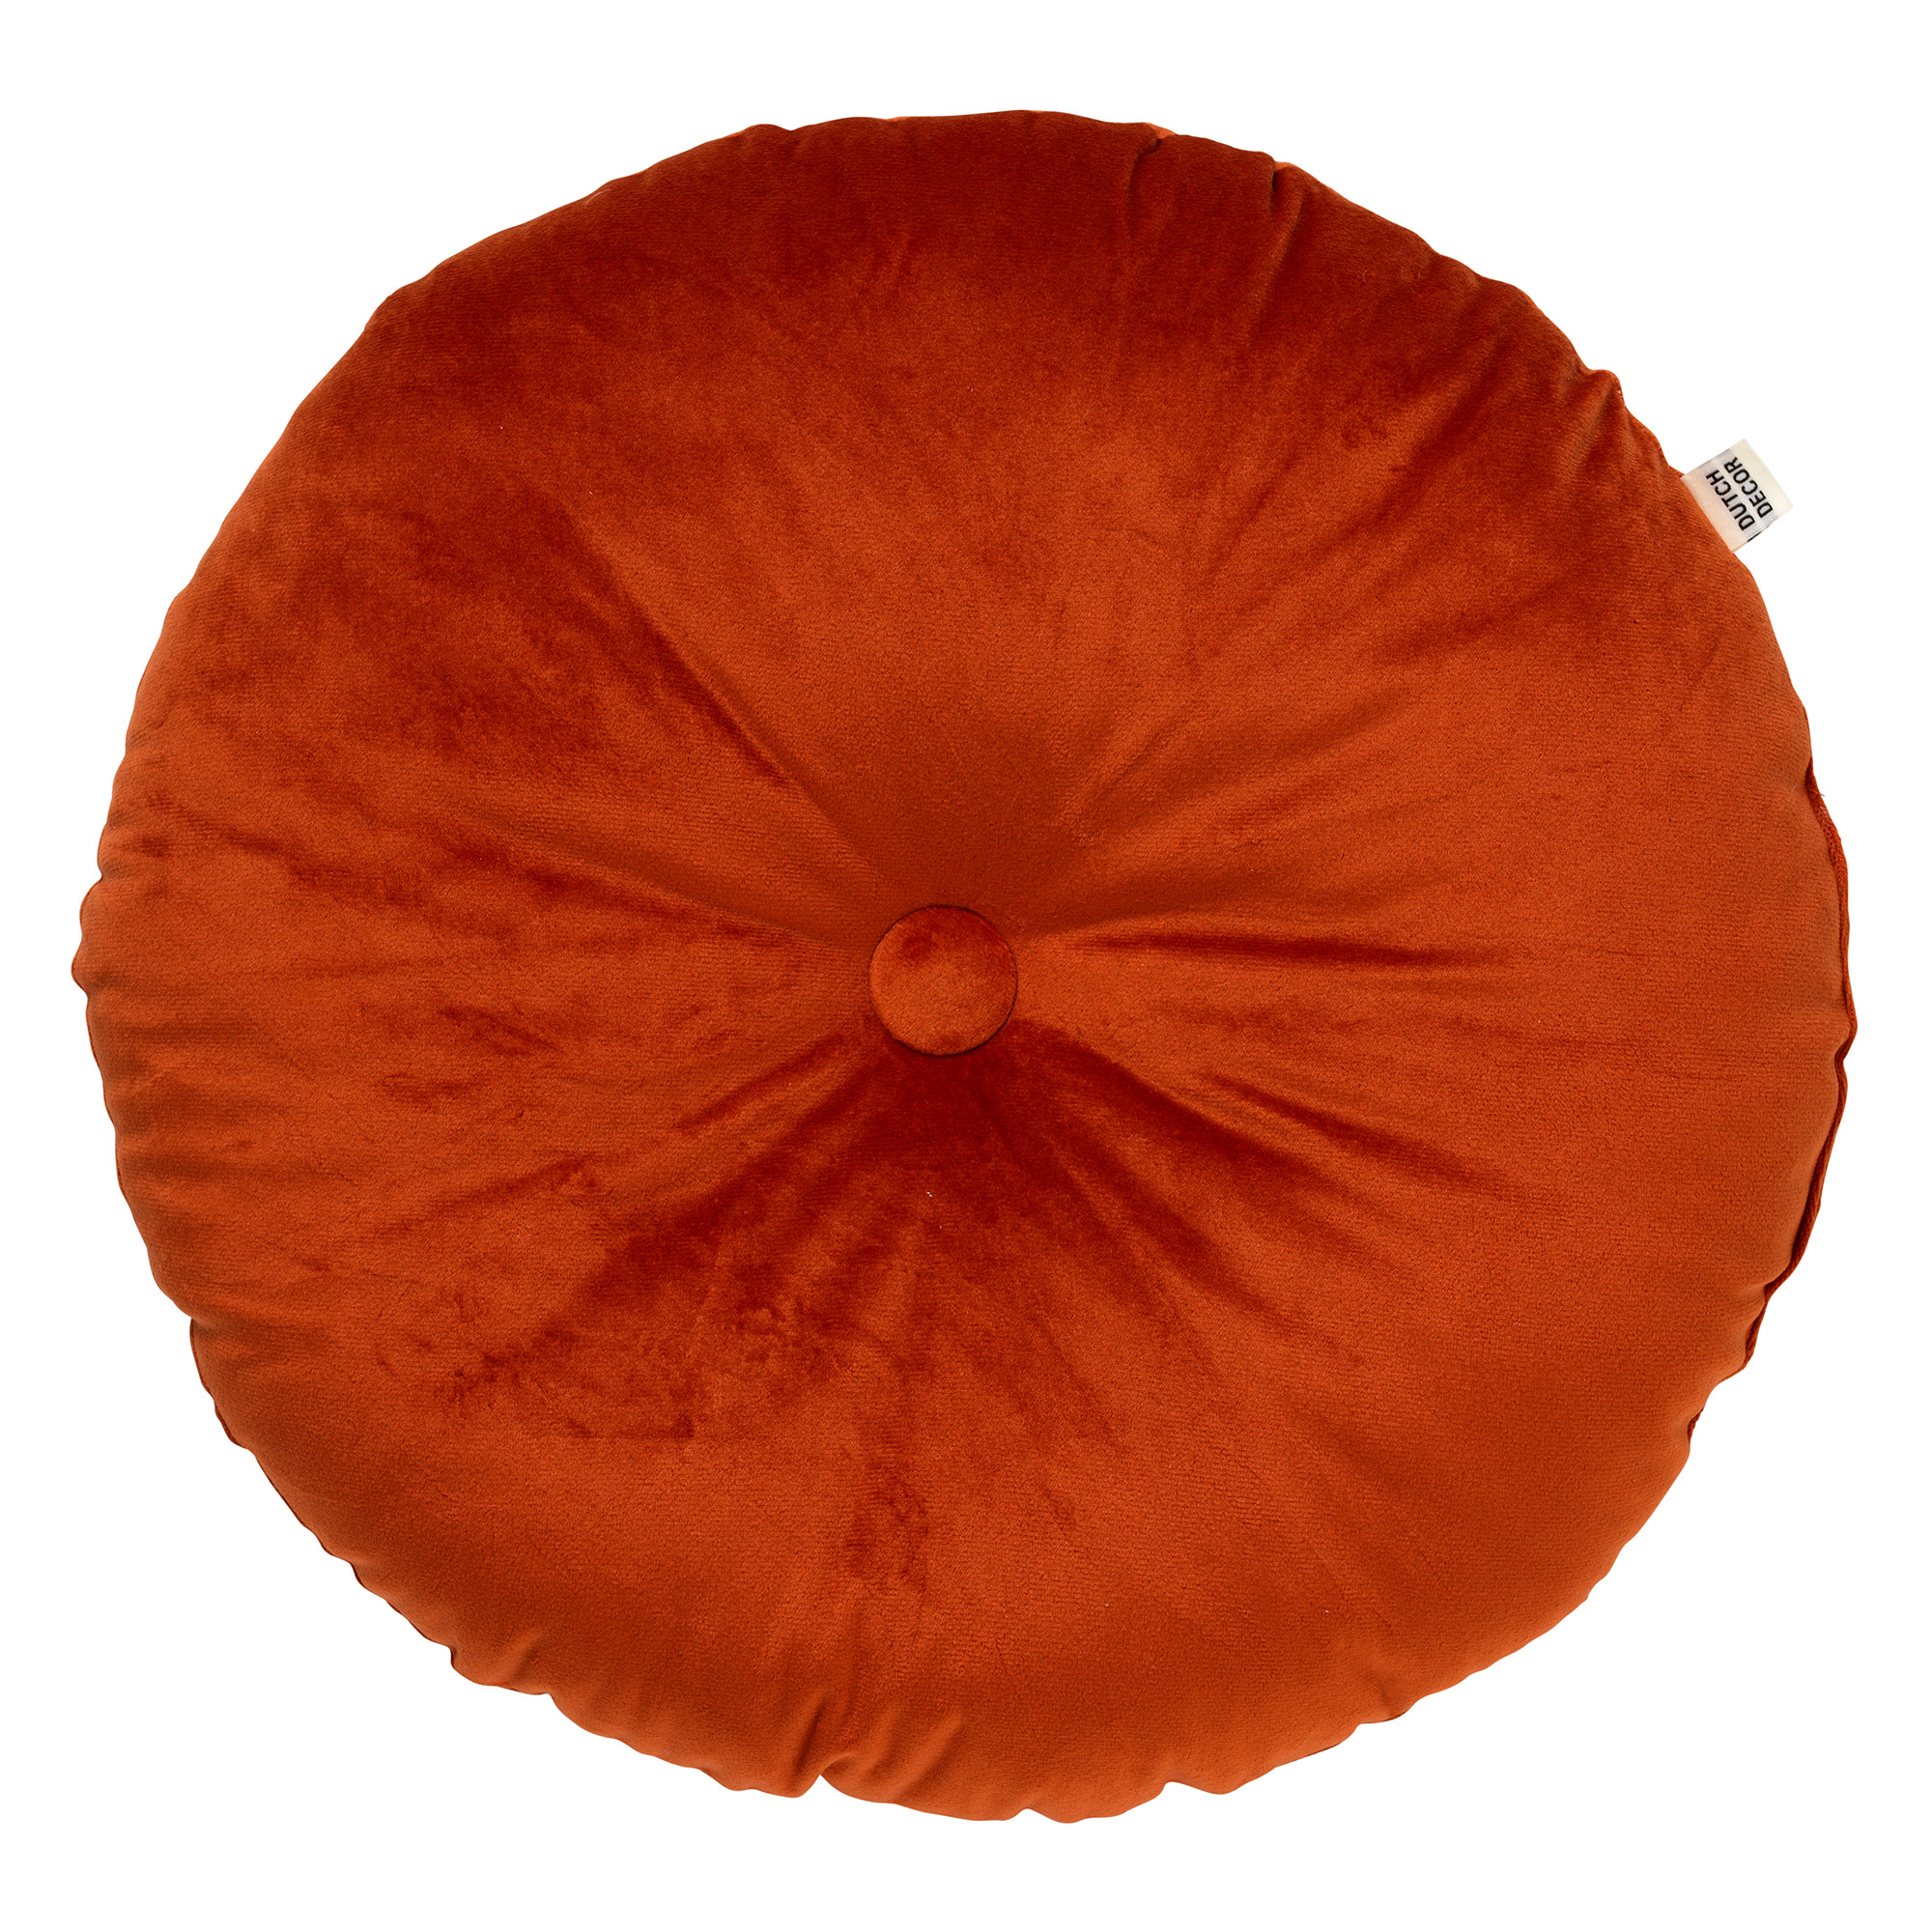 OLLY - Cushion 40 cm Potters Clay - orange-terracotta